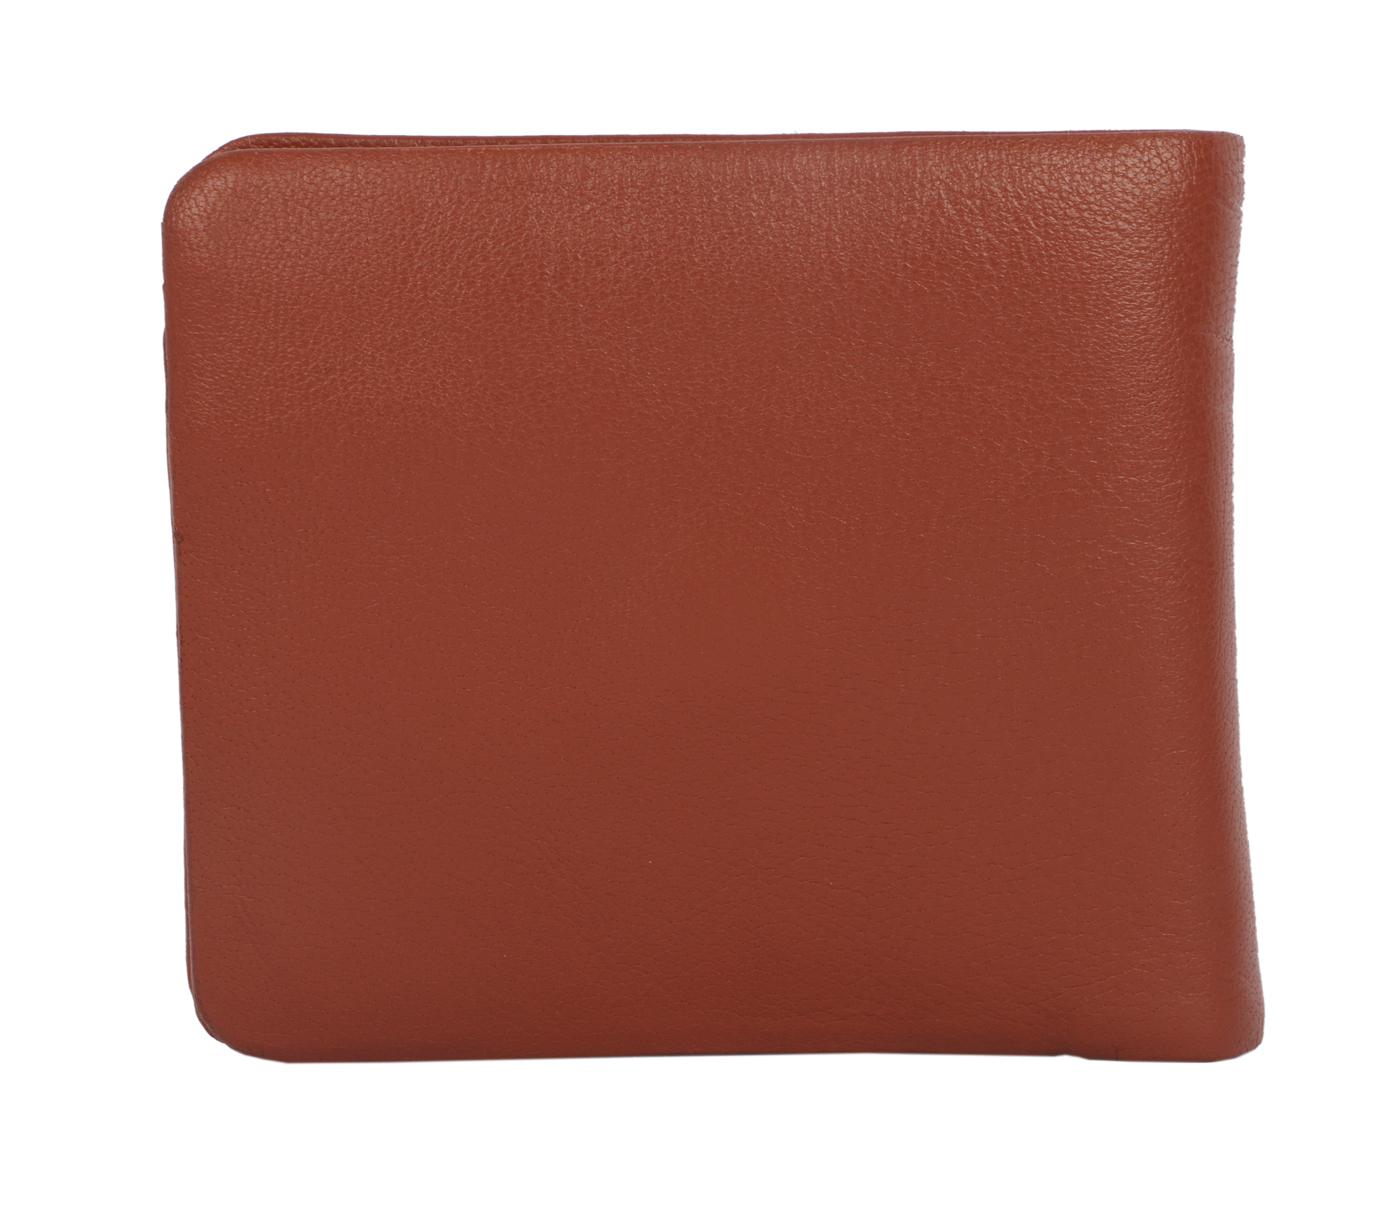 Wallet-Almeda-Men's bifold wallet with coin pocket in Genuine Leather - Tan